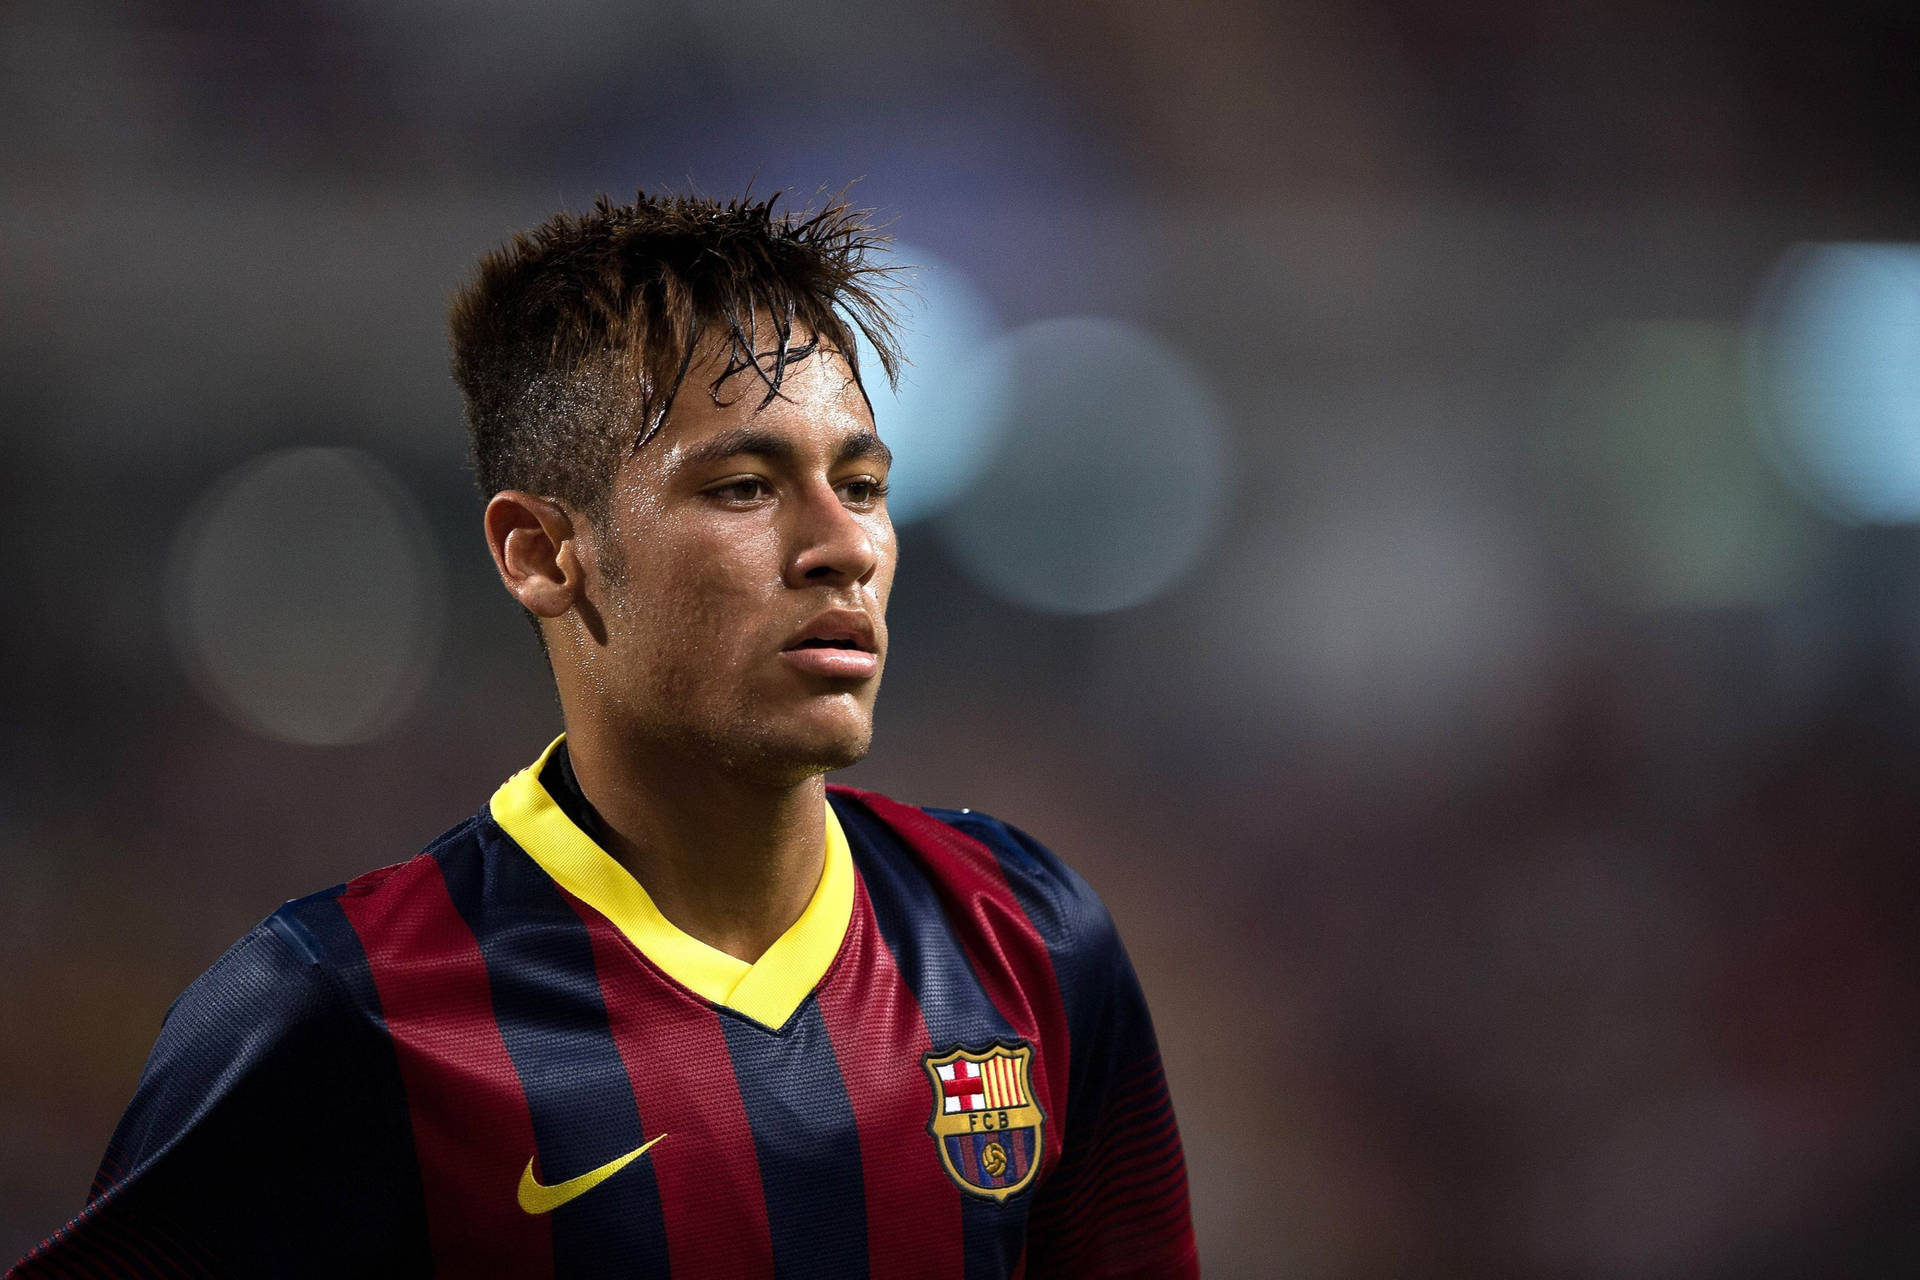 Neymar Jr. In Action - High Definition 4k Wallpaper Background